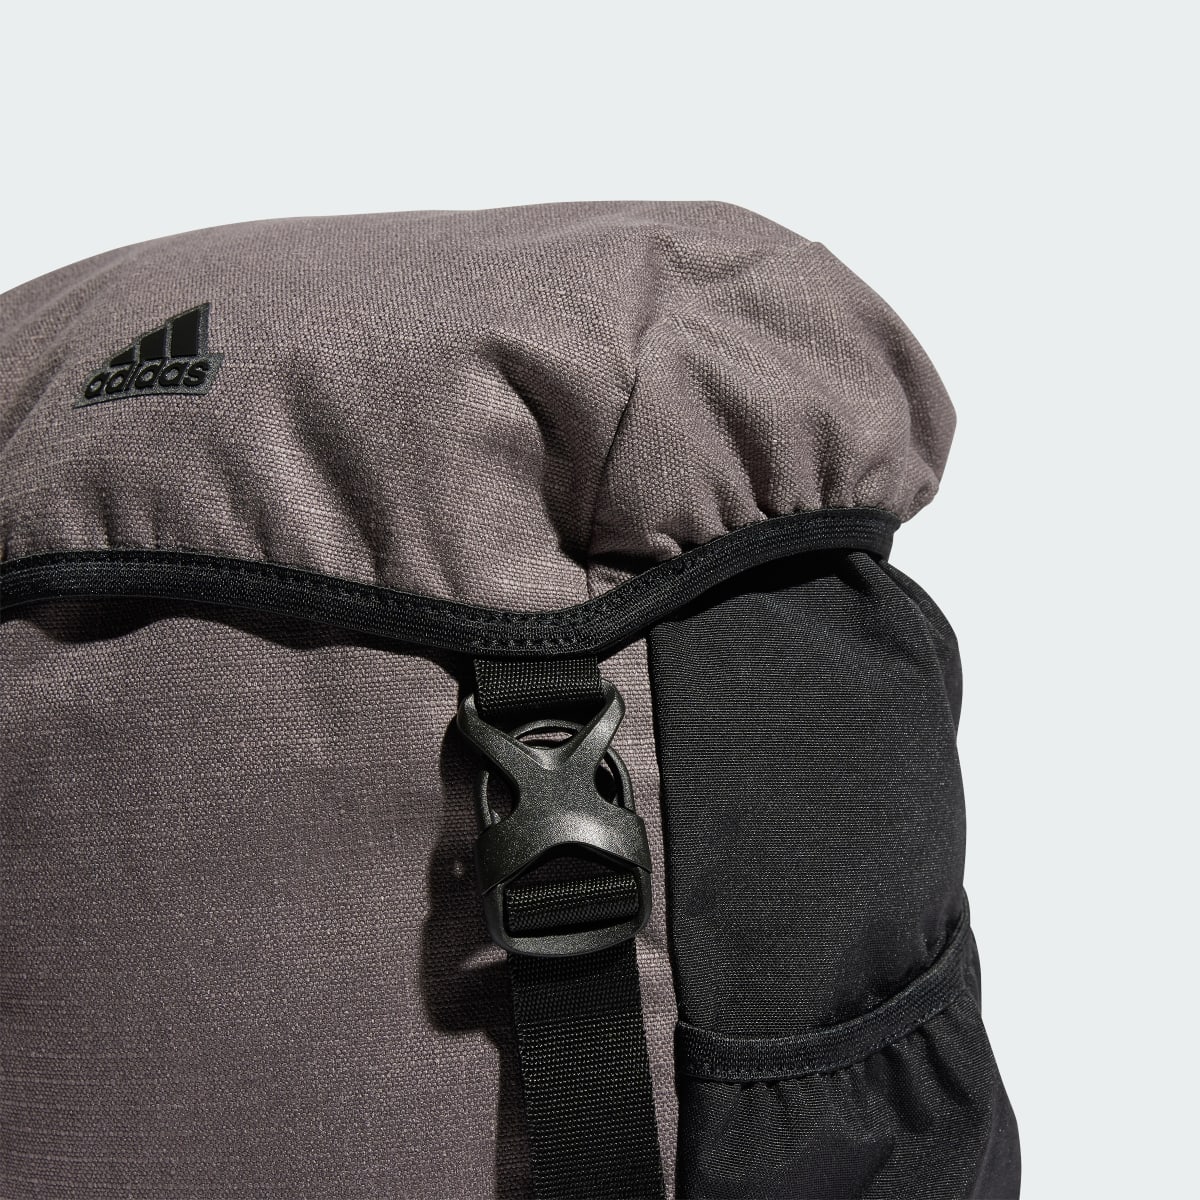 Adidas Xplorer Backpack. 4